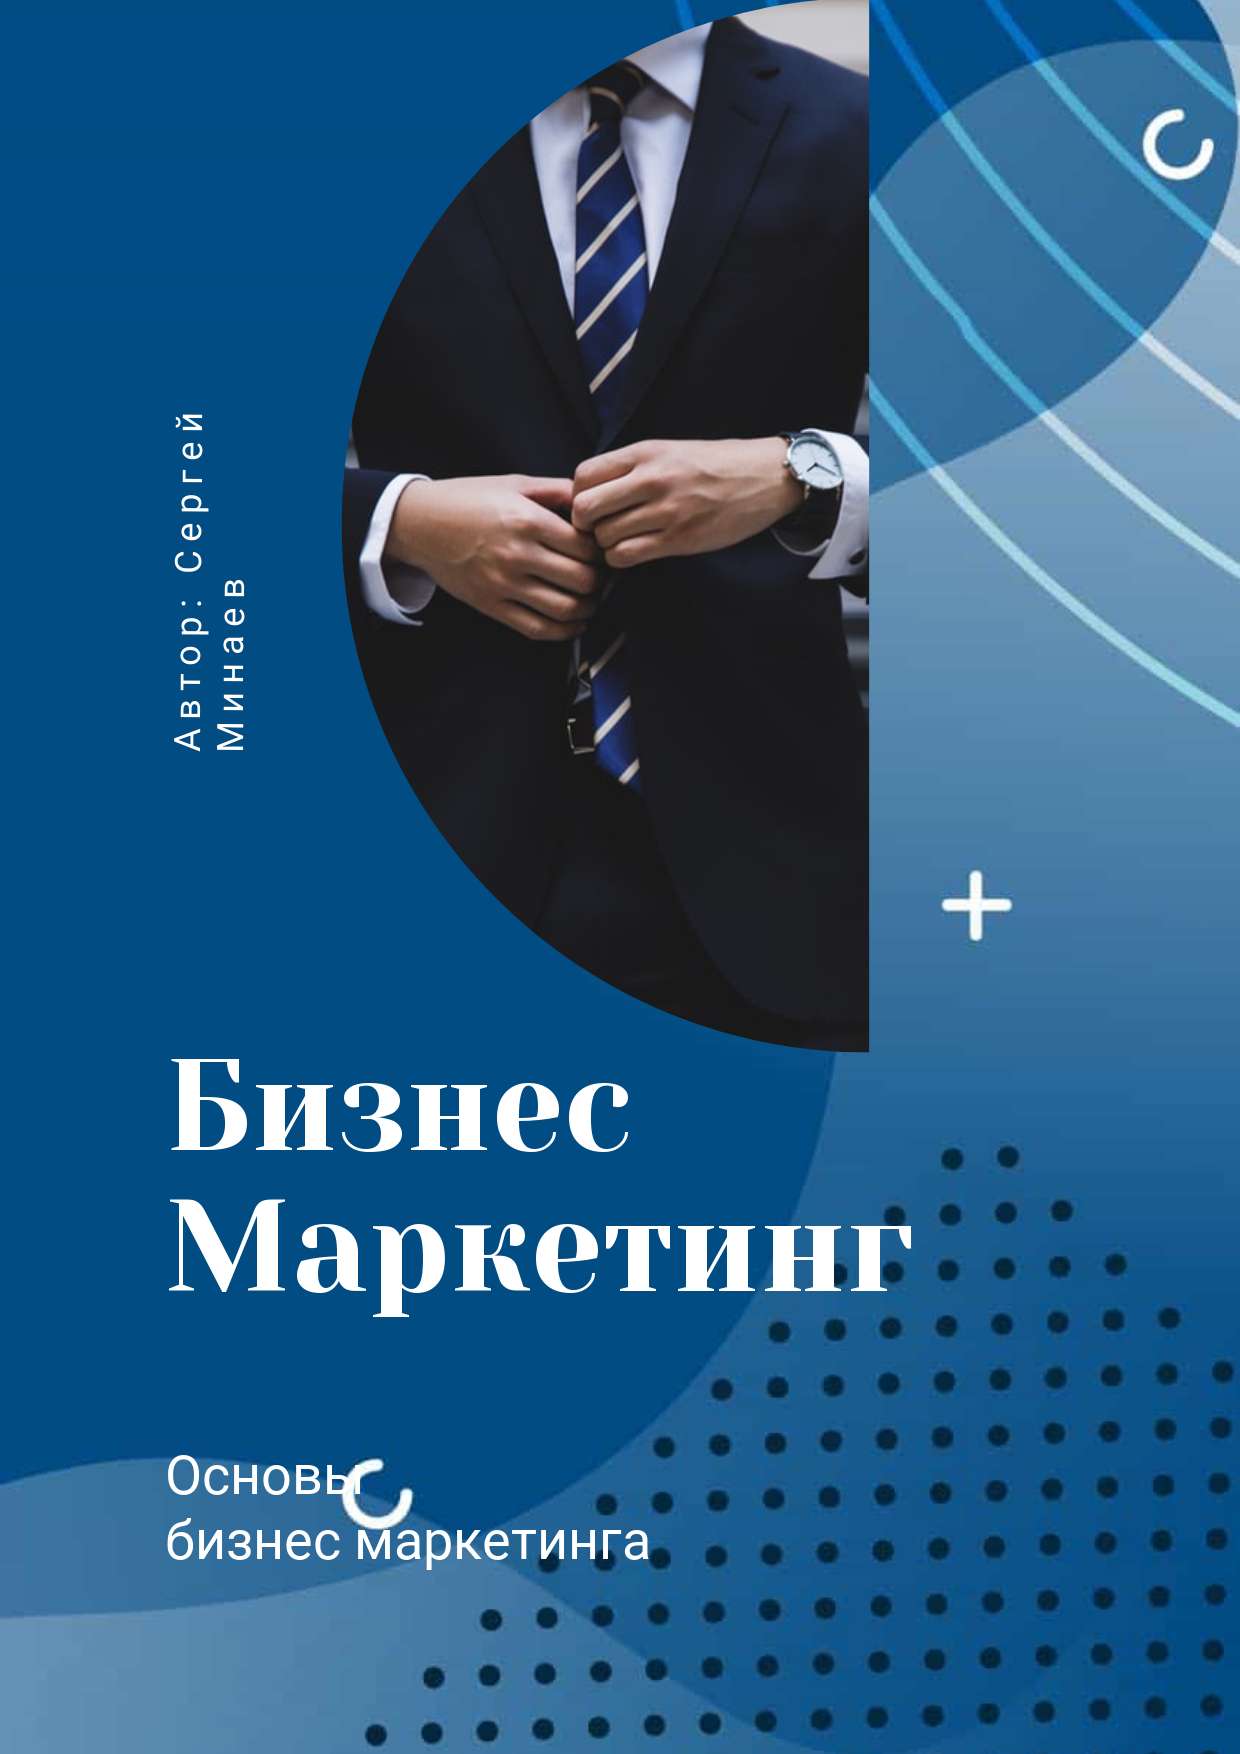 Темно-синяя деловая обложка с геометрическими фигурами и линиями на фоне